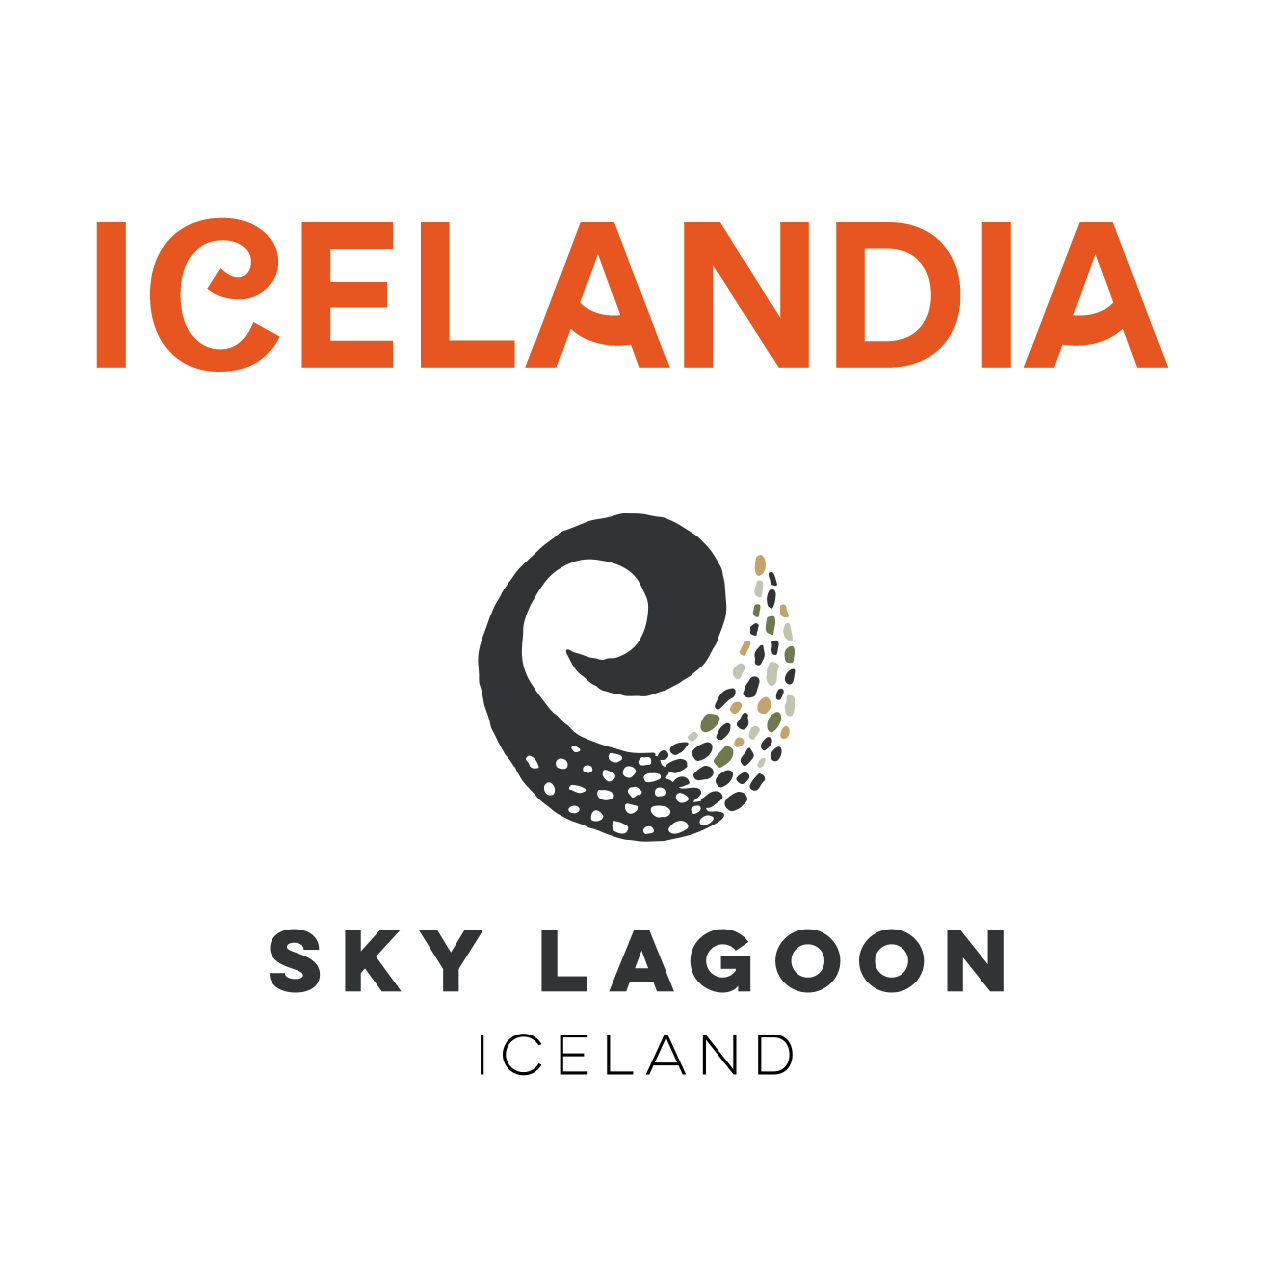 ICELANDIA // Sky Lagoon Iceland - Shared table